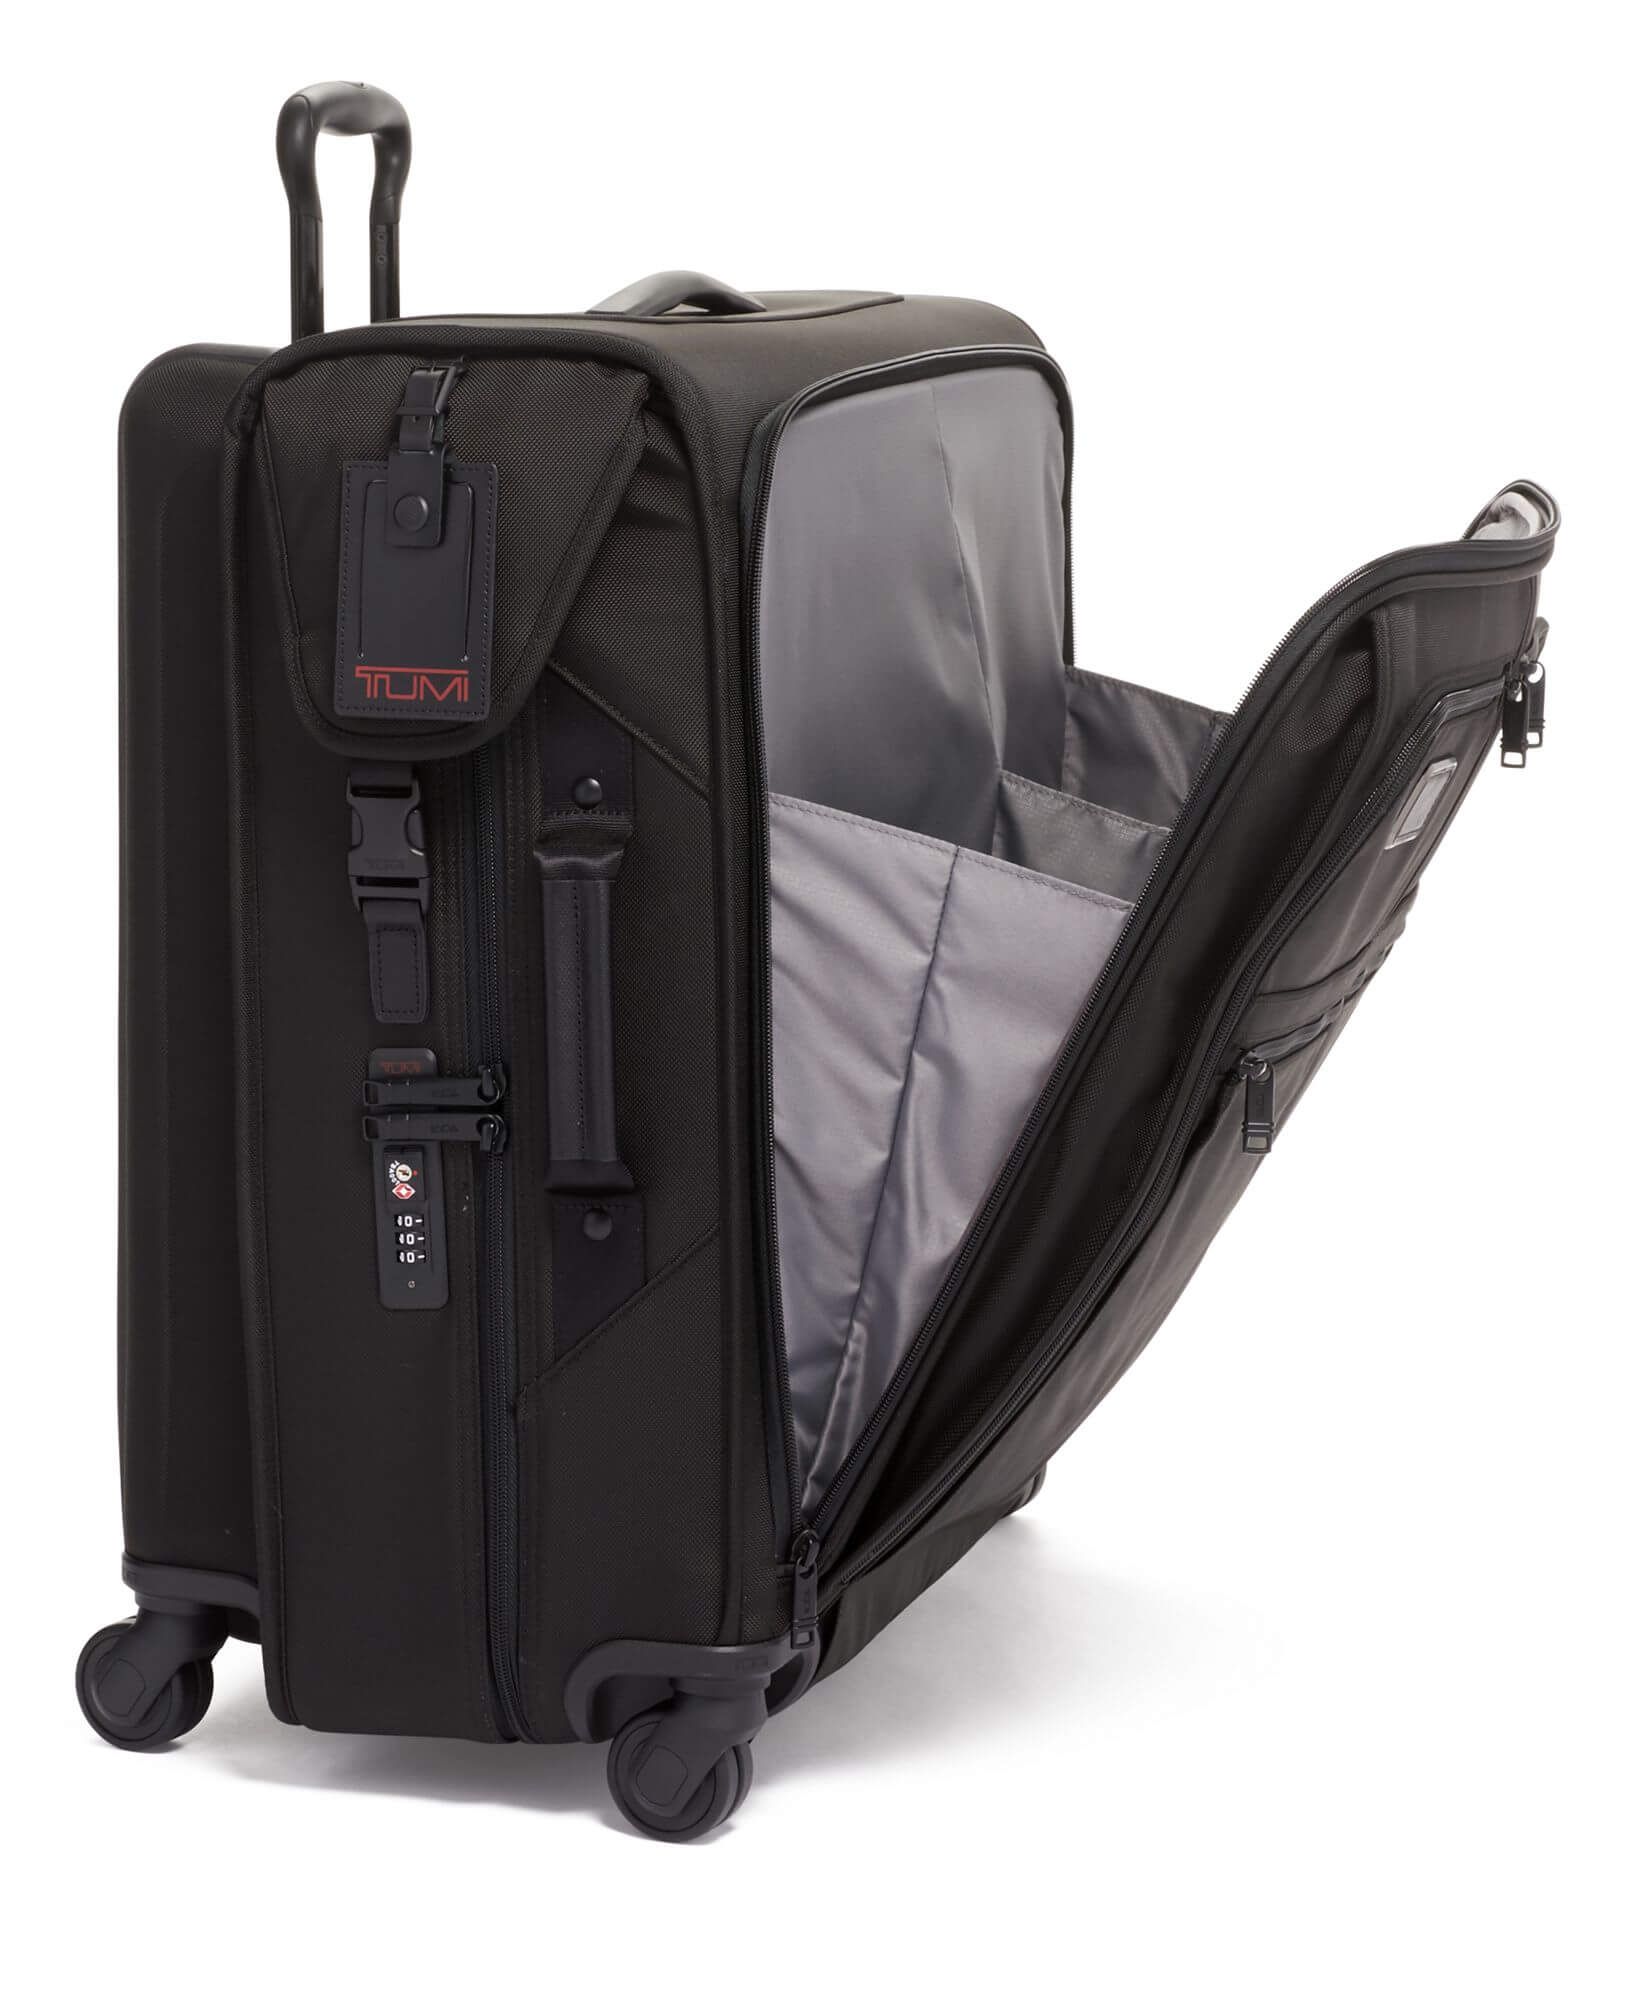 tumi alpha garment bag suitcase black bag open front pocket with tsa lock and handle